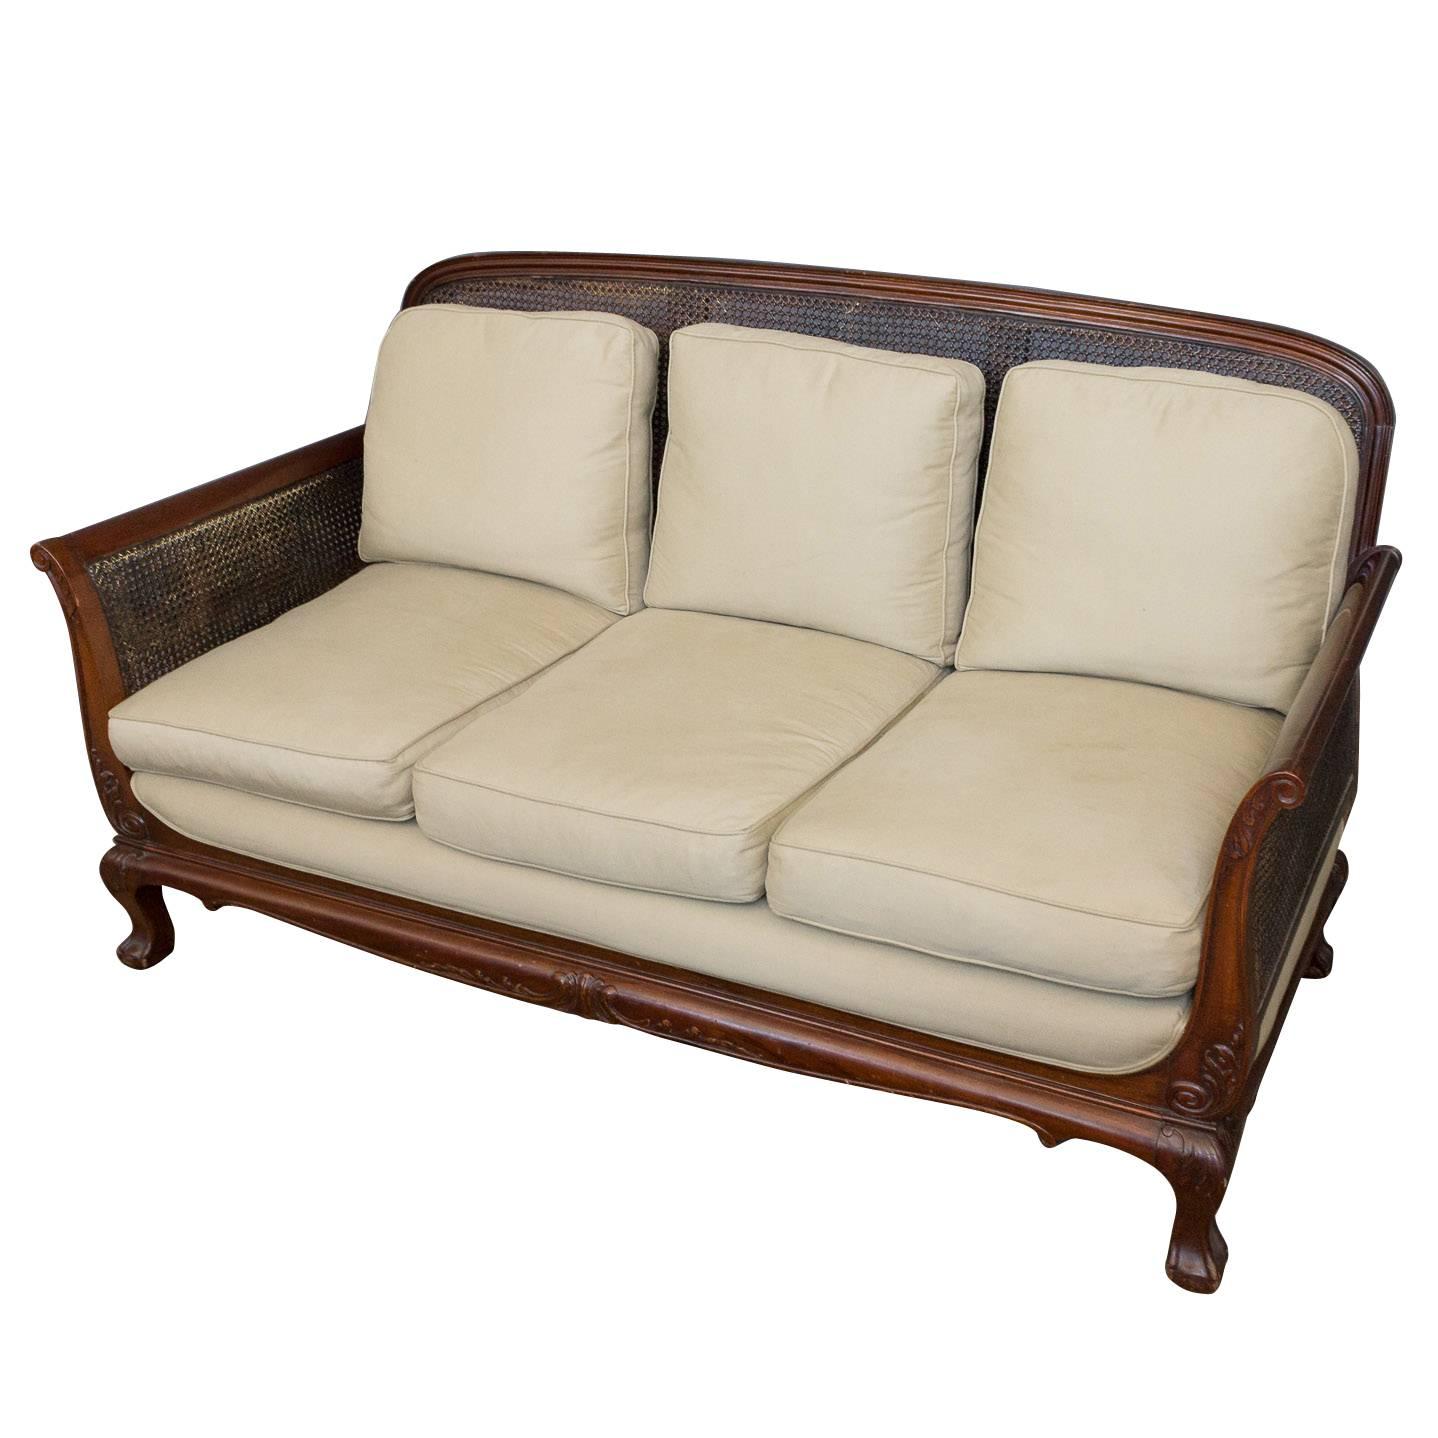 Anglo-Indian Colonial Style Mahogany Sofa 2